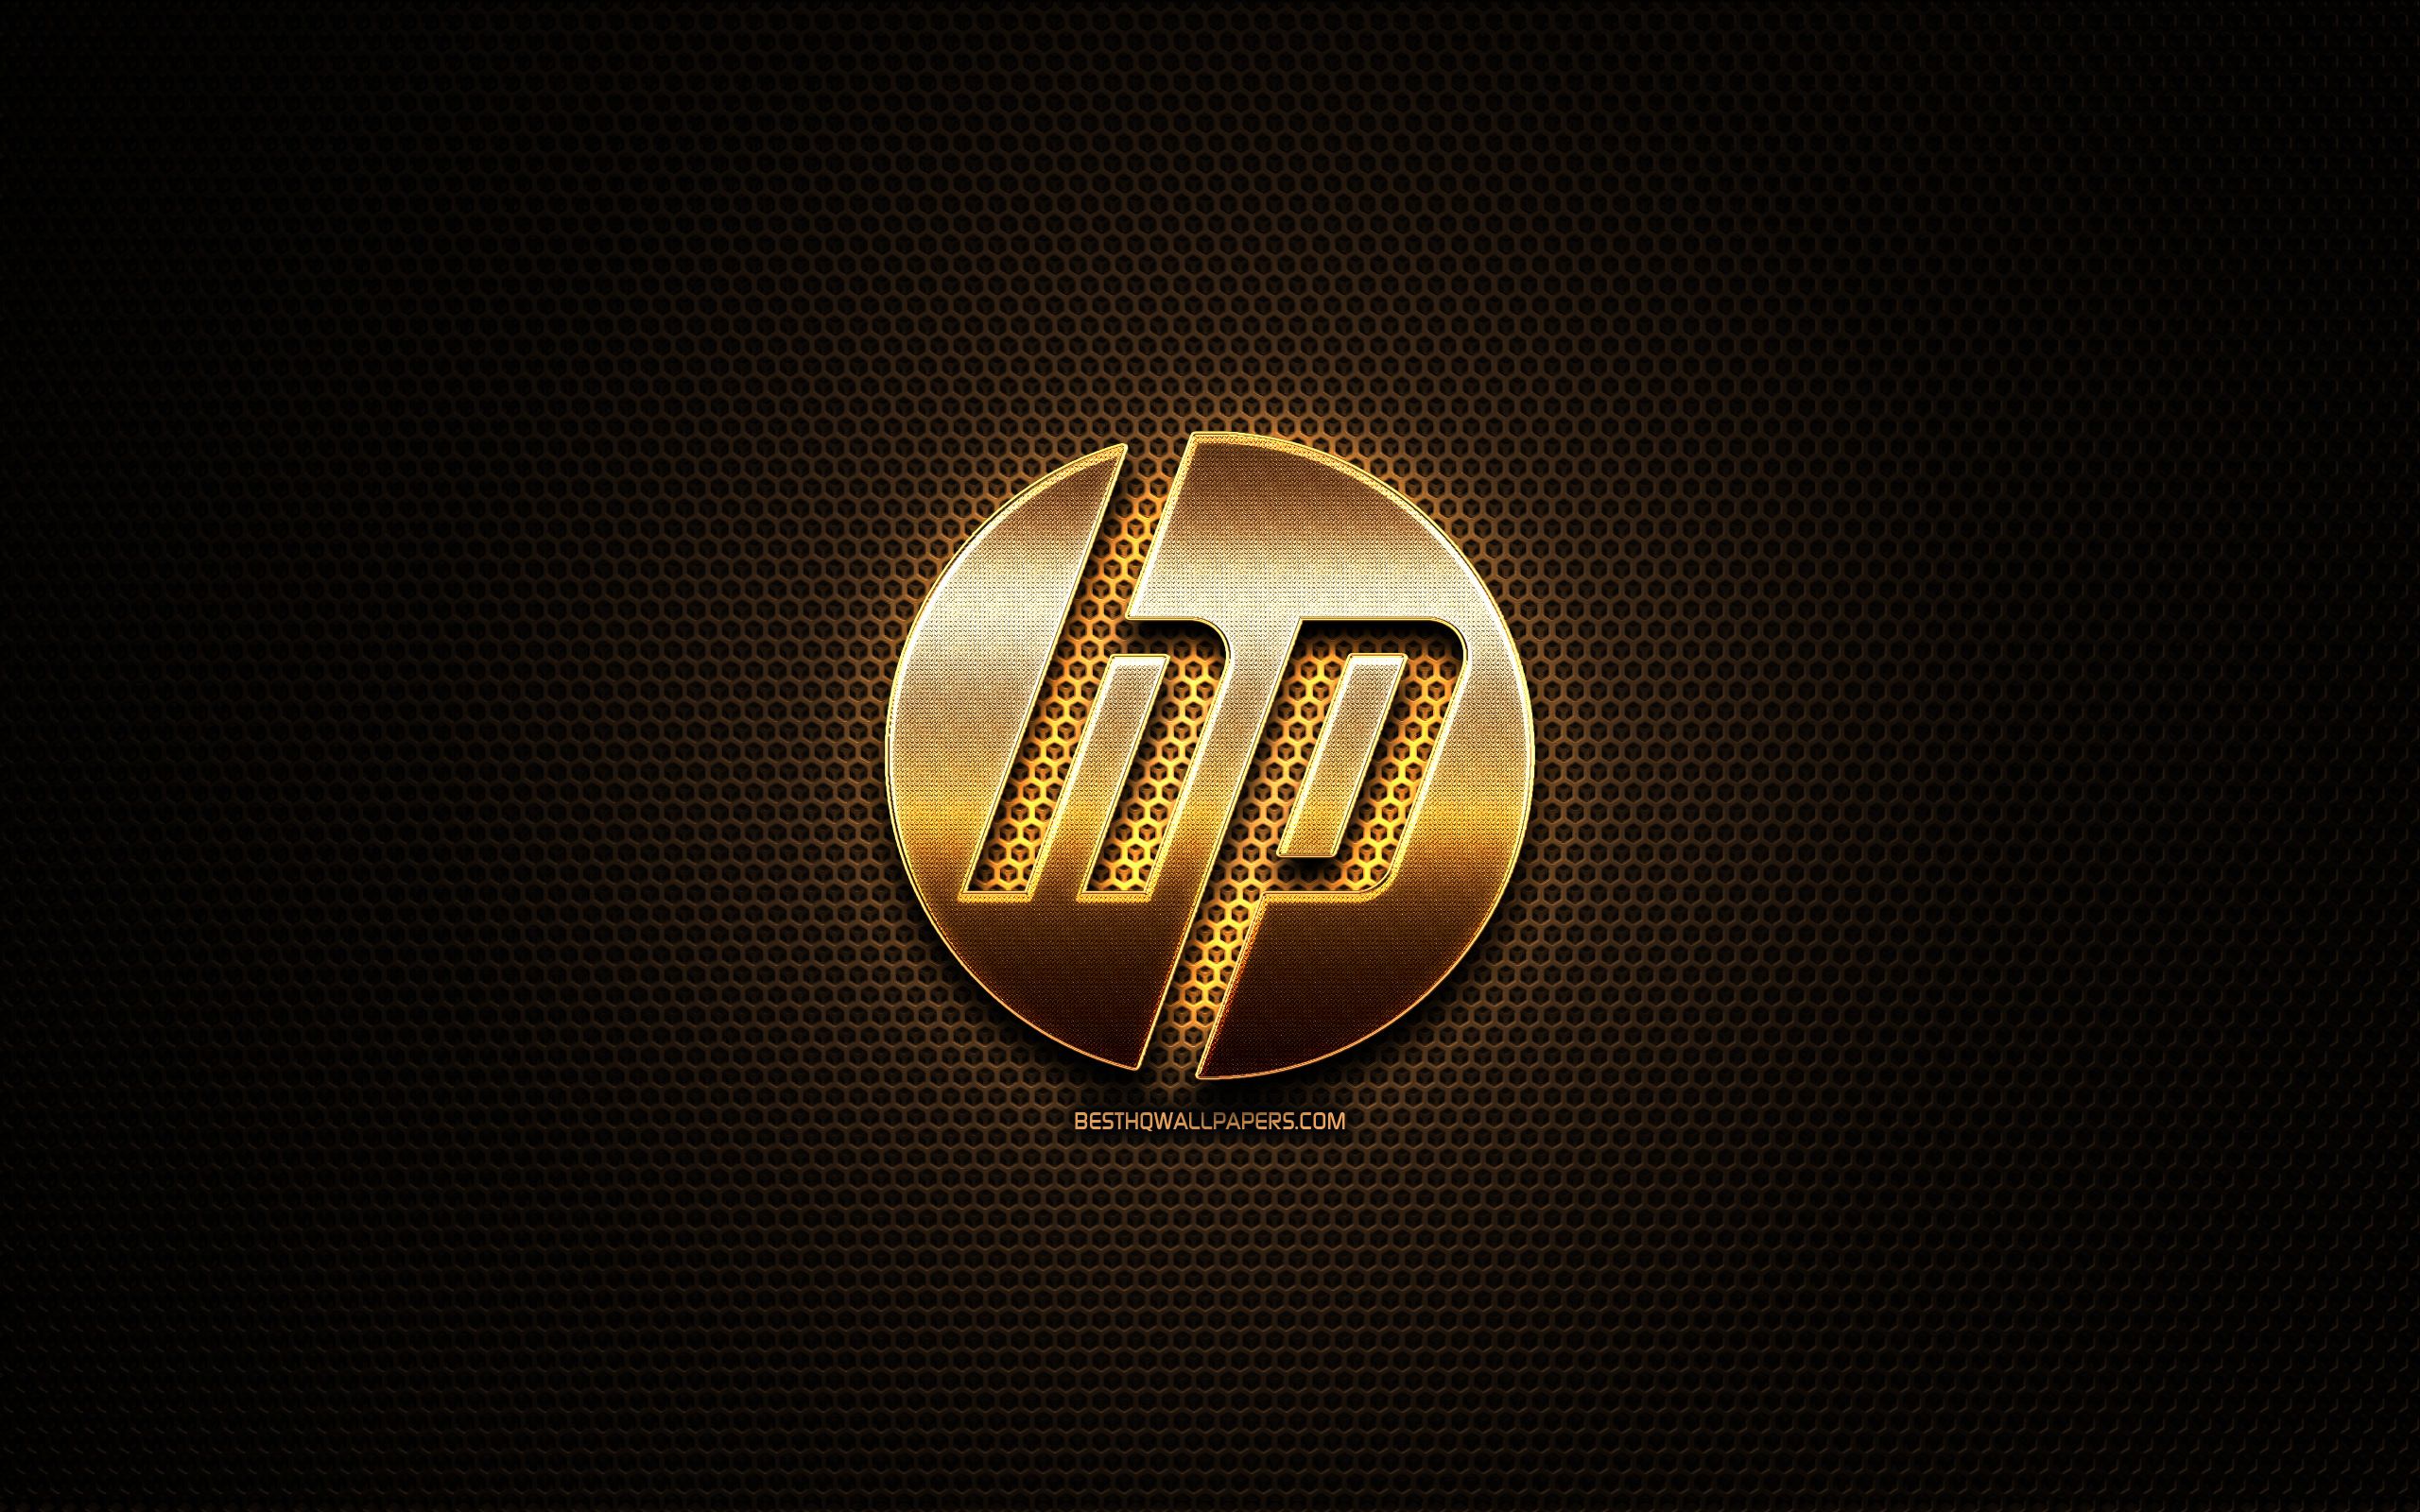 Download Wallpaper HP Glitter Logo, Hewlett Packard, Metal Grid Background, HP 3D Logo, Brands, HP For Desktop With Resolution 2560x1600. High Quality HD Picture Wallpaper